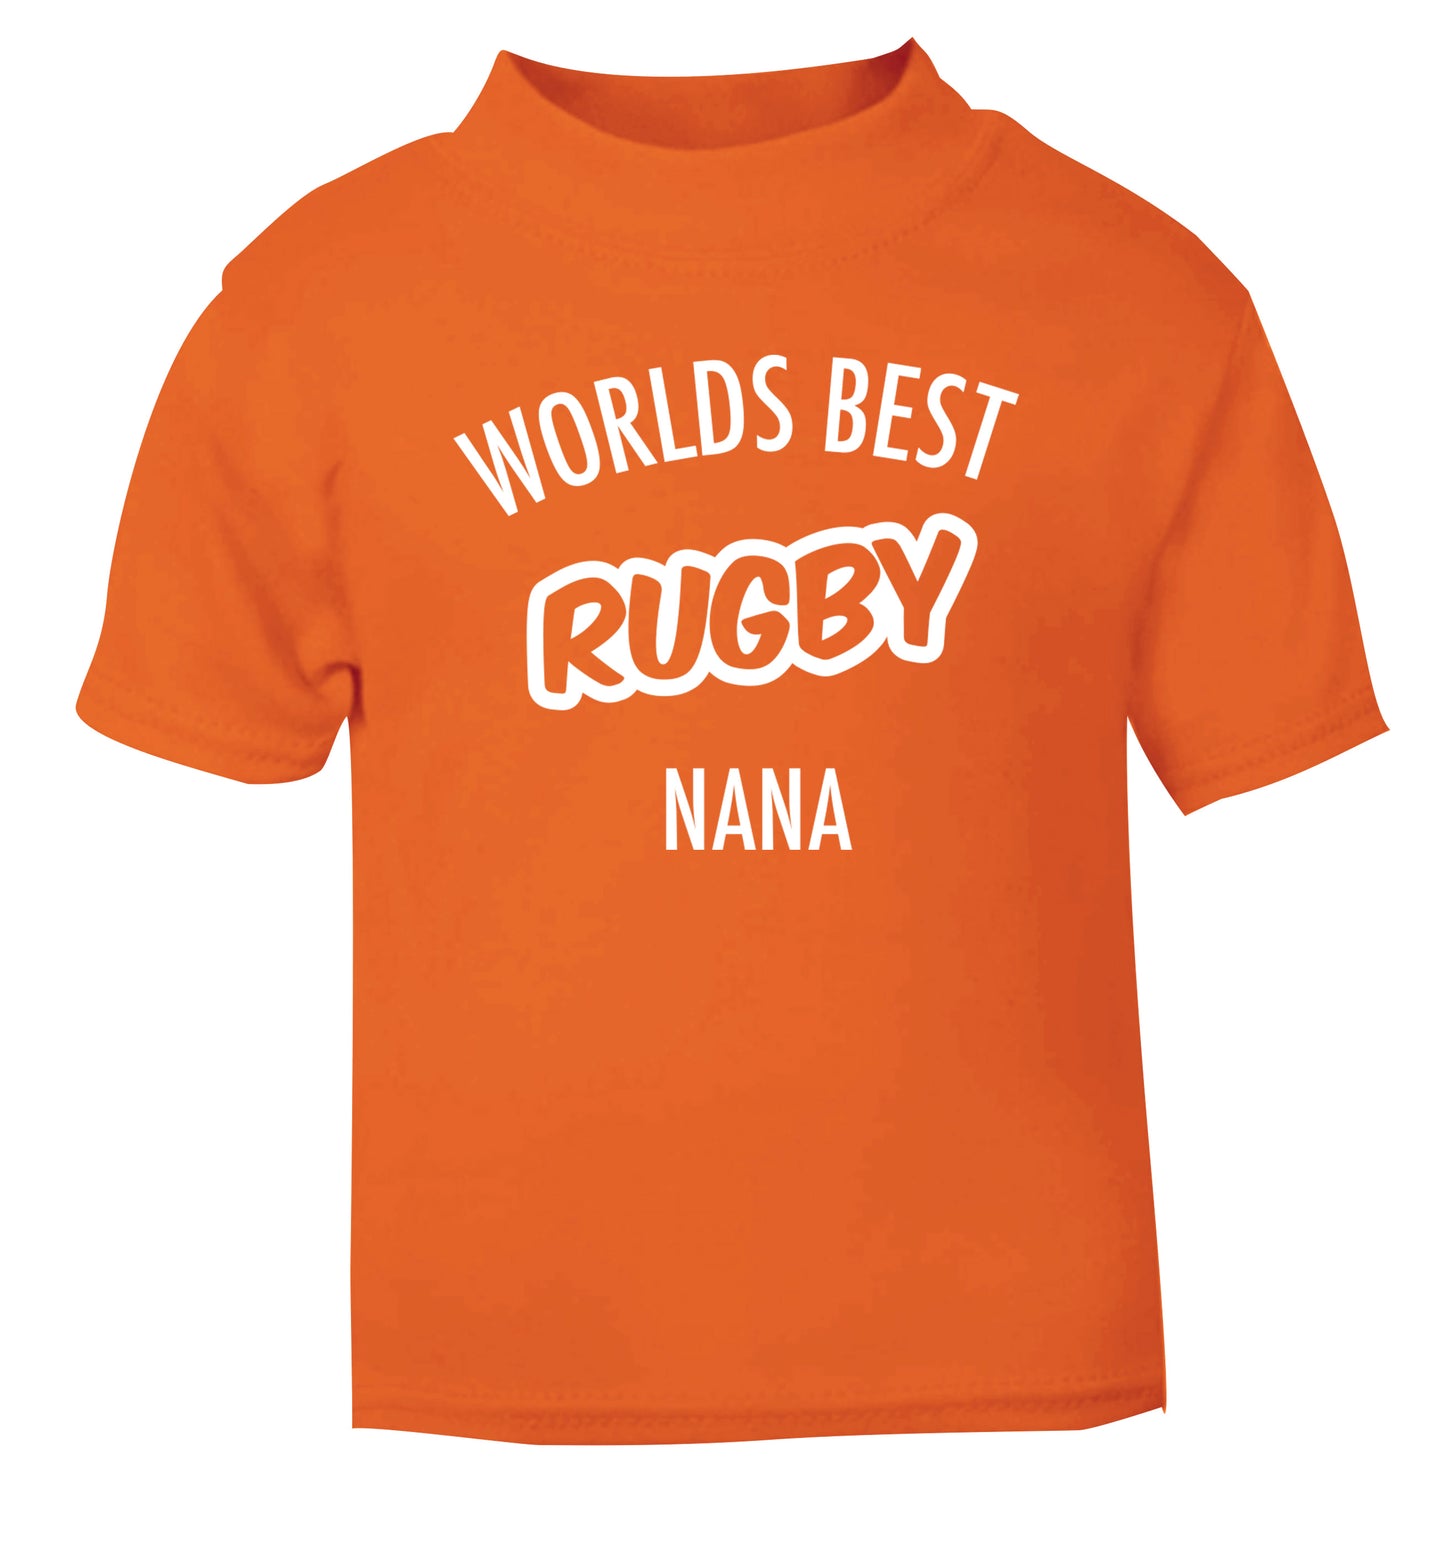 Worlds Best Rugby Grandma orange Baby Toddler Tshirt 2 Years